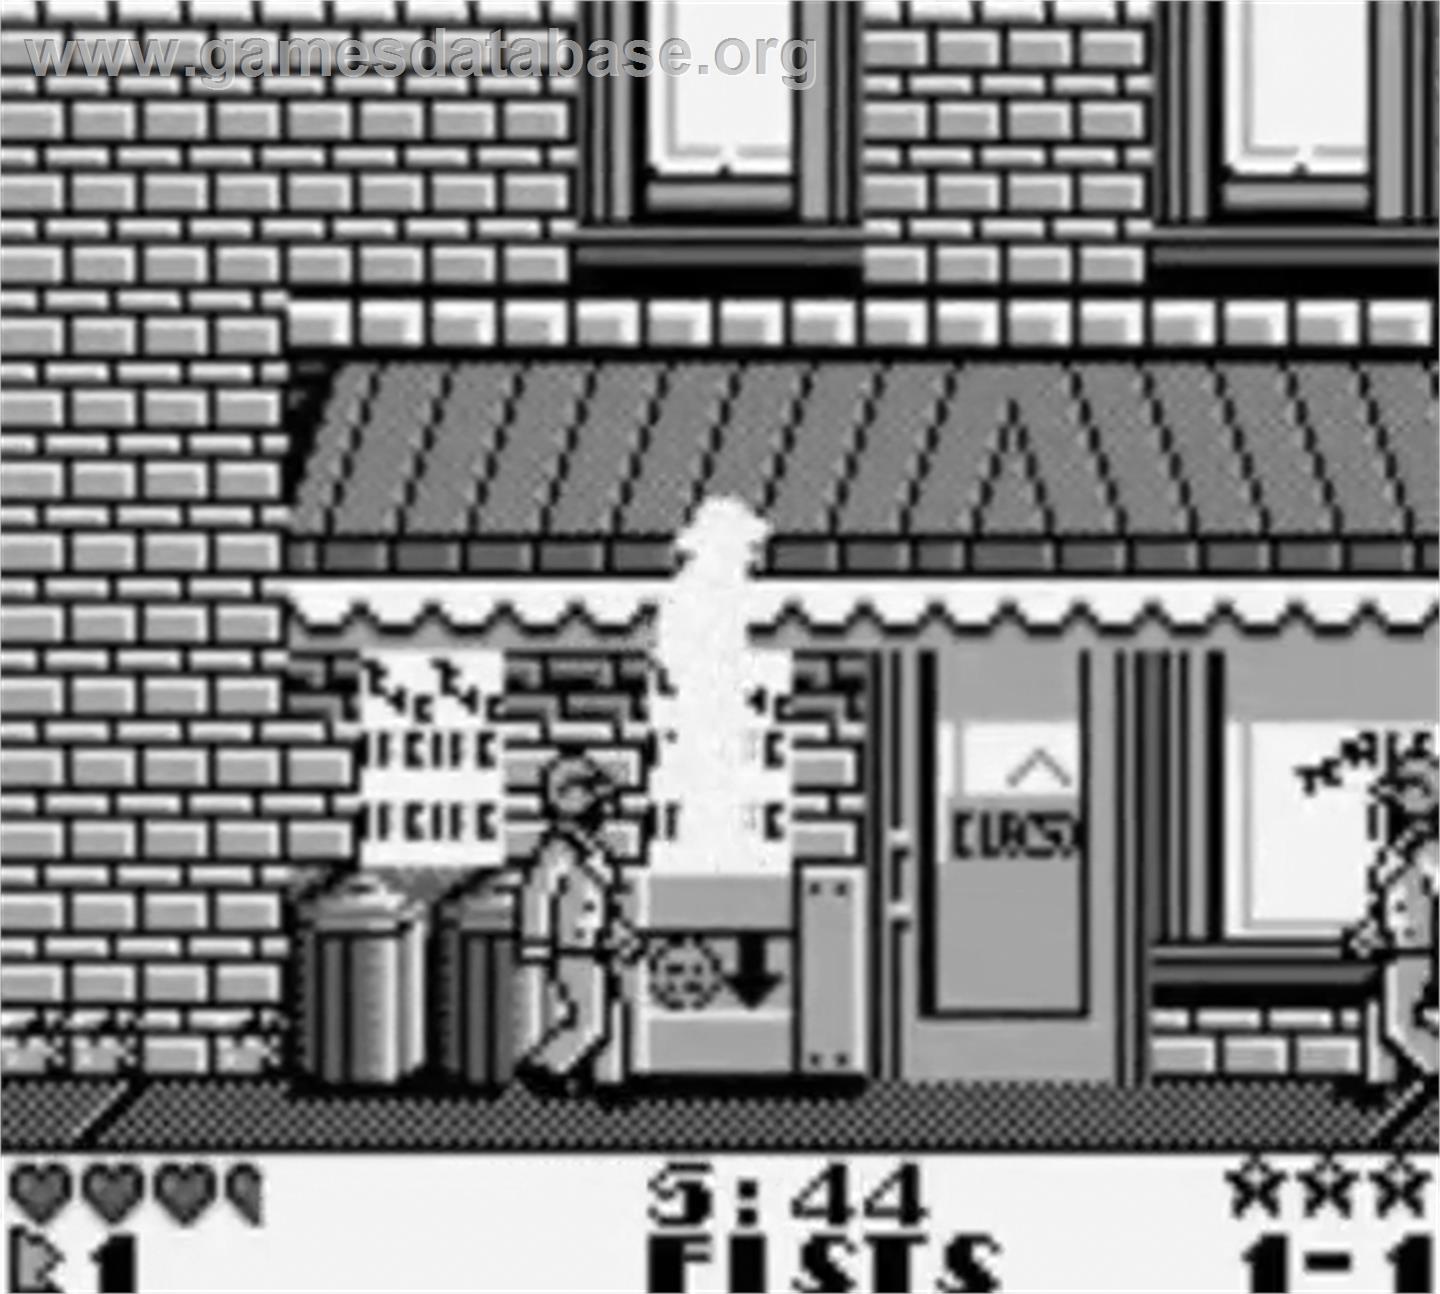 Dick Tracy - Nintendo Game Boy - Artwork - In Game